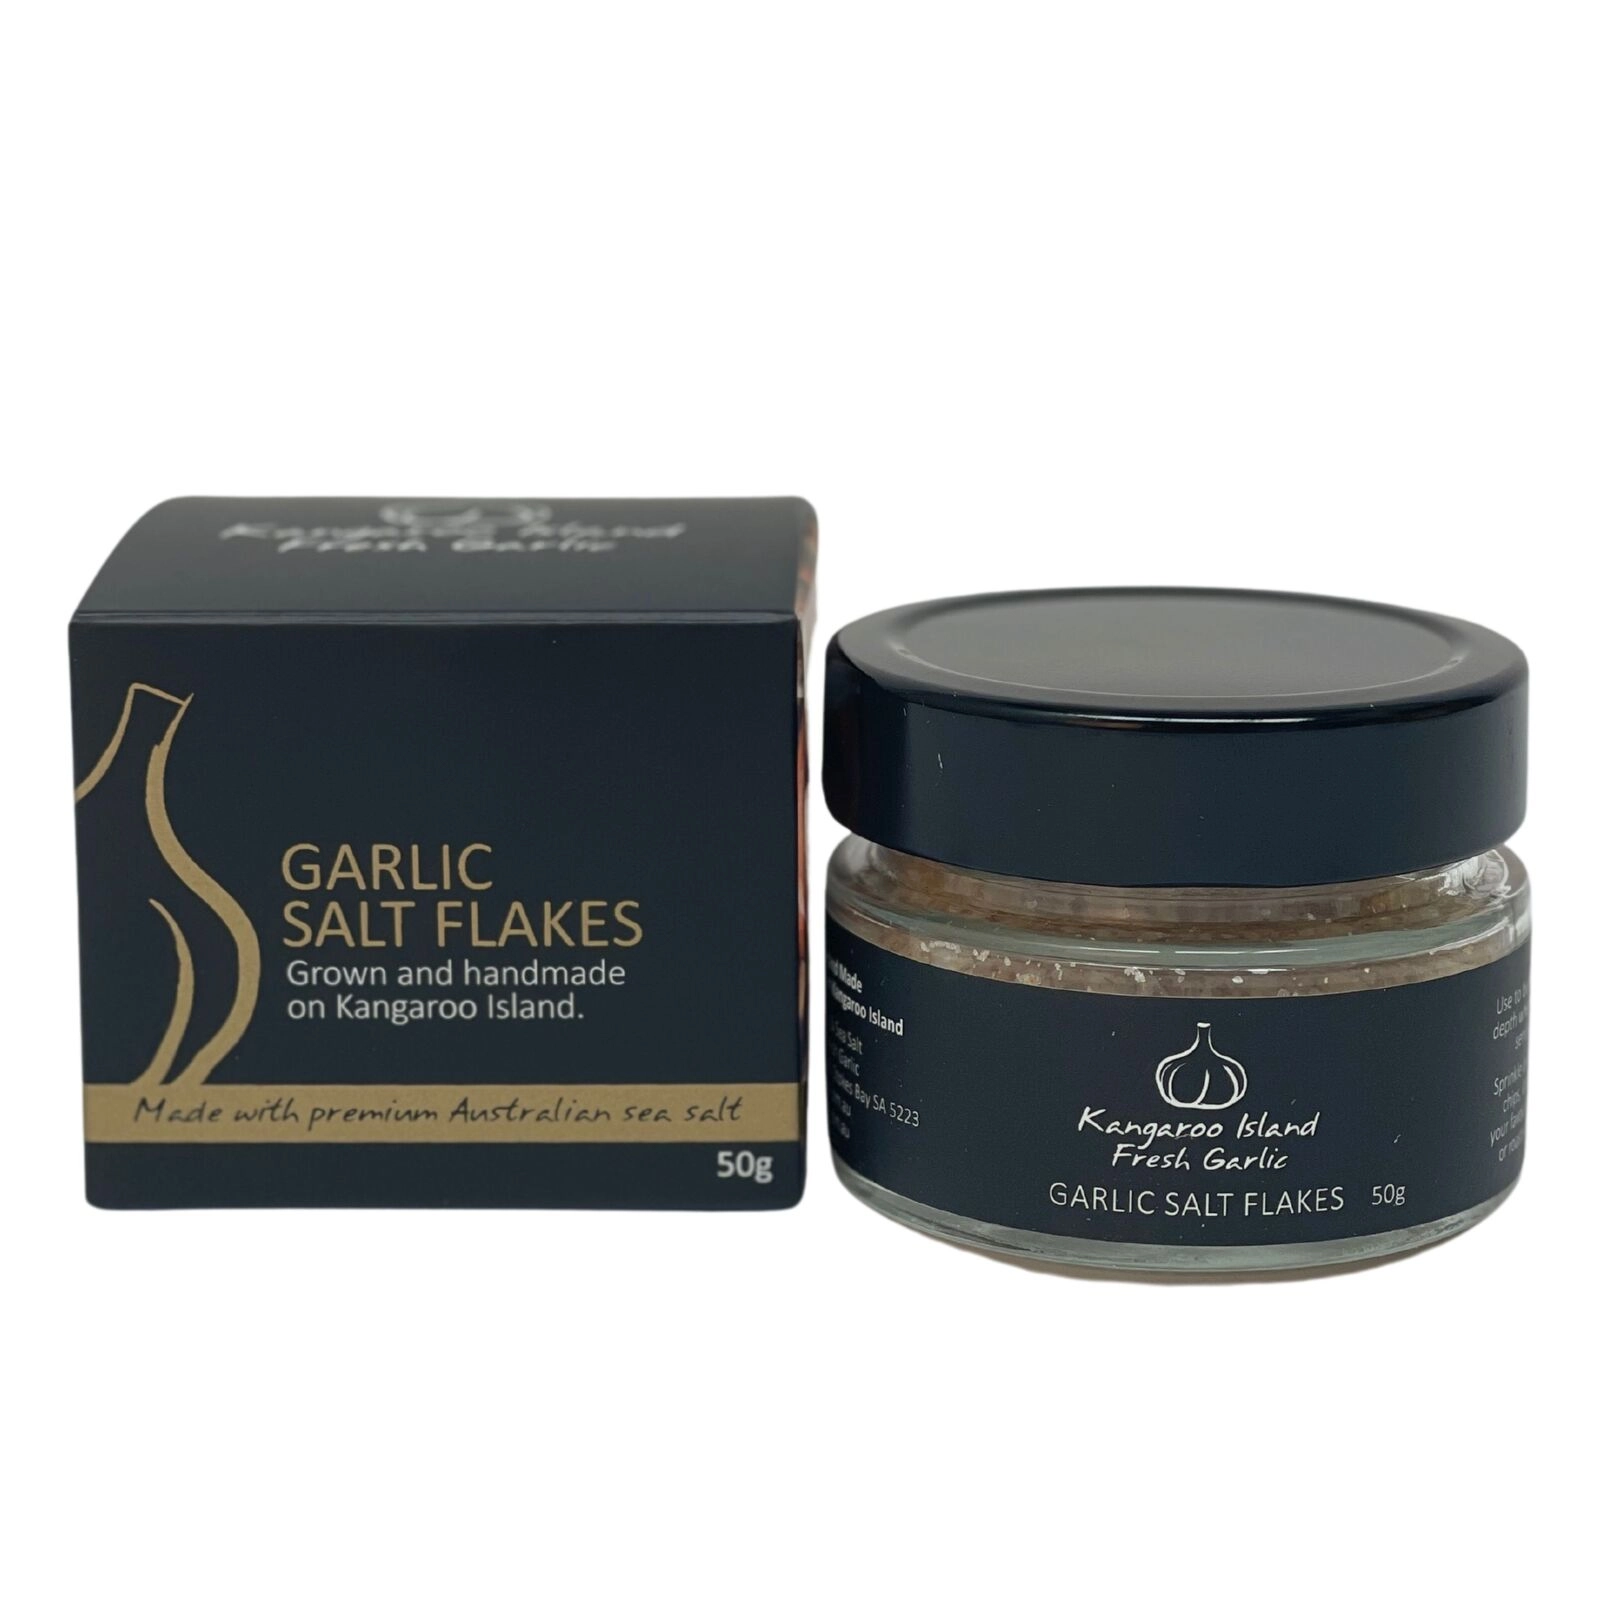 Kangaroo Island Fresh Garlic Garlic Salt Flakes (50g)